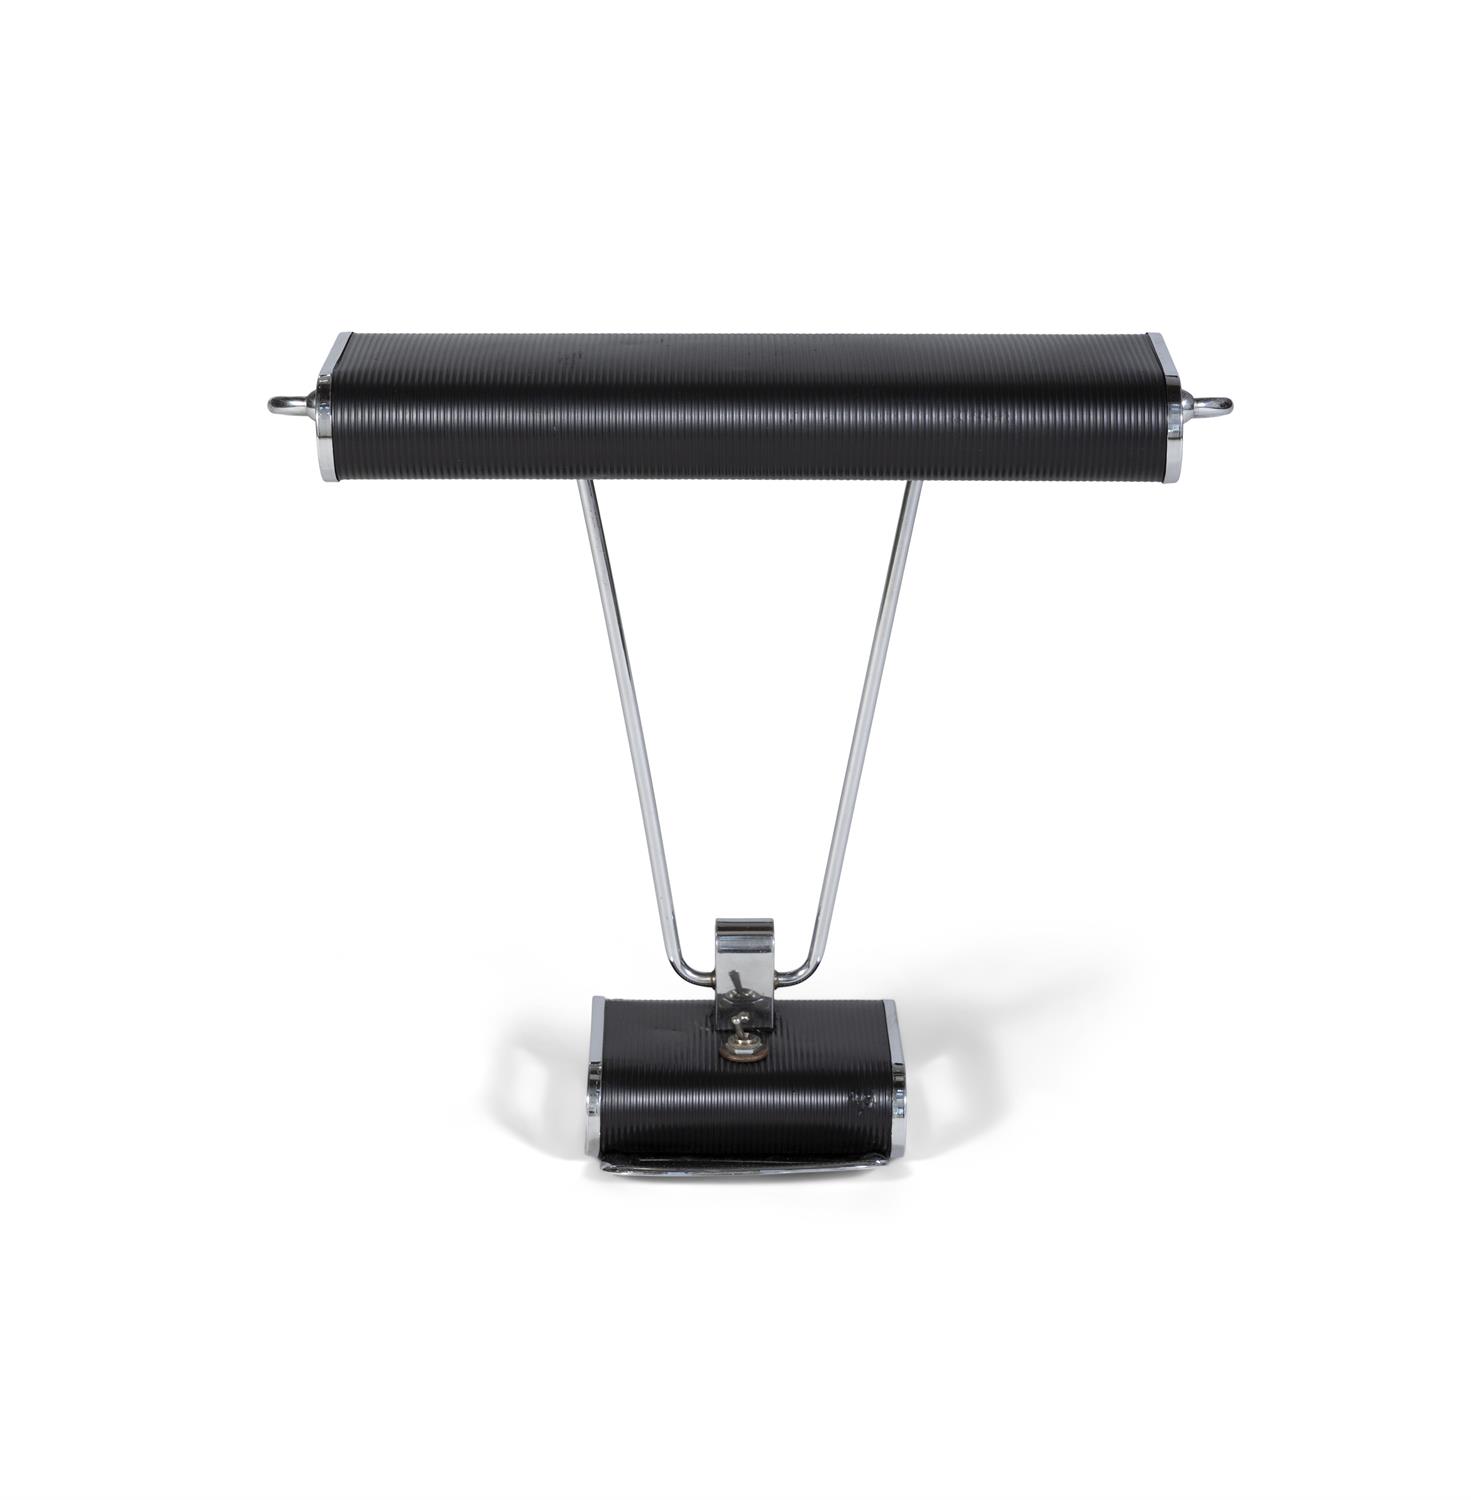 DESK LAMP N71 desk lamp attrib. to Eileen Gray for Jumo. 44 x 15 x 39cm(h) - Image 2 of 6